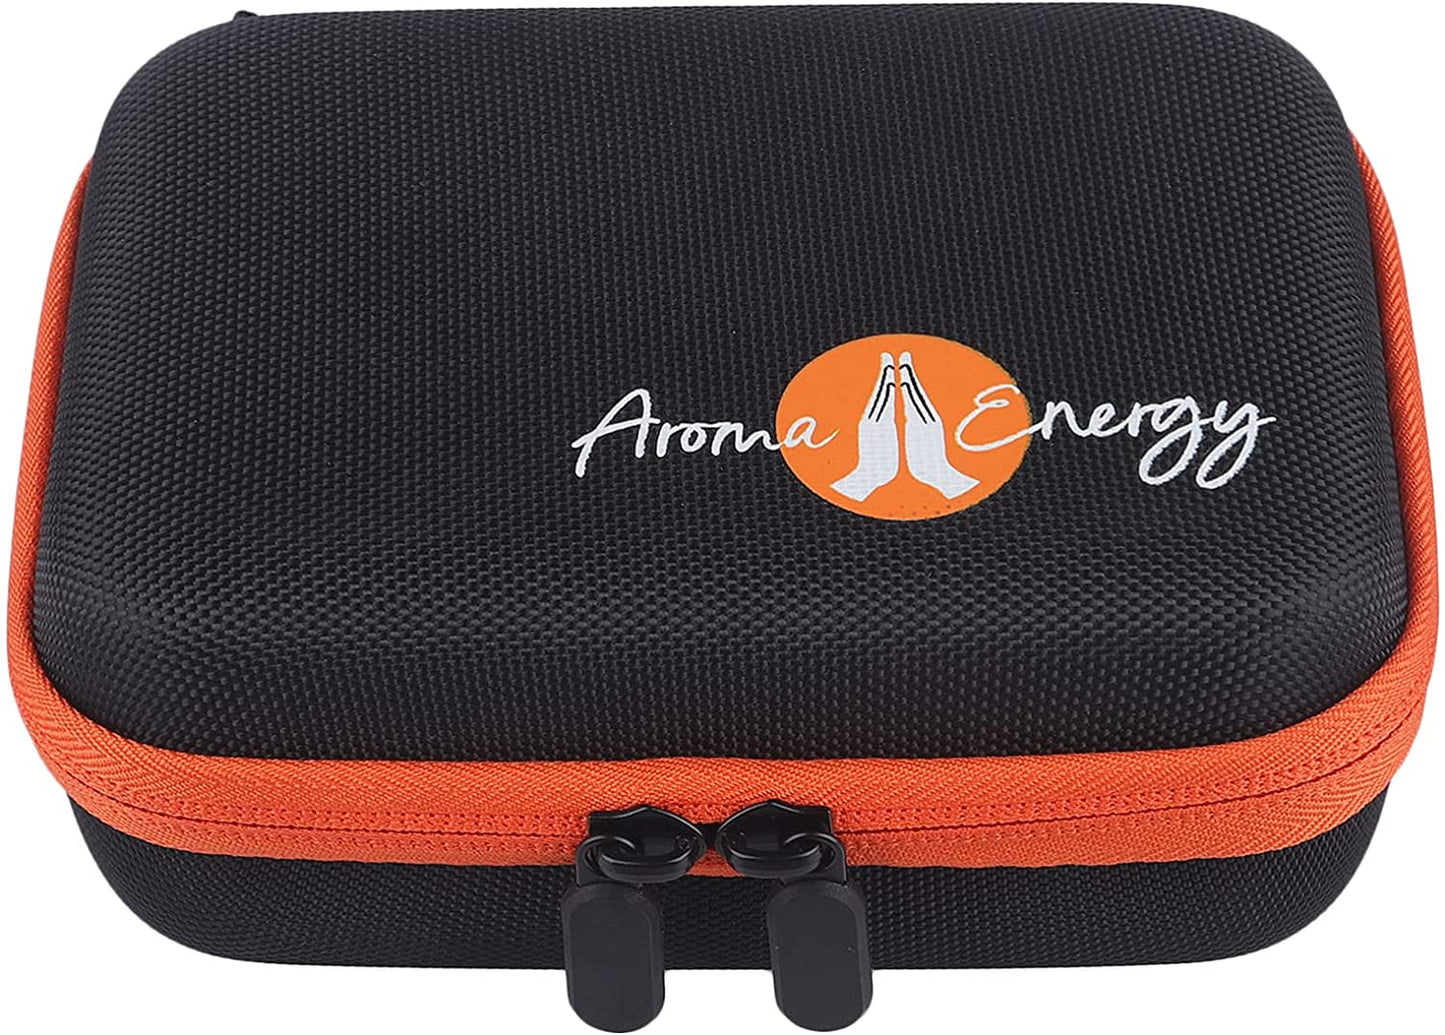 Essential Oil Gift Set Travel Case - Aroma Energy